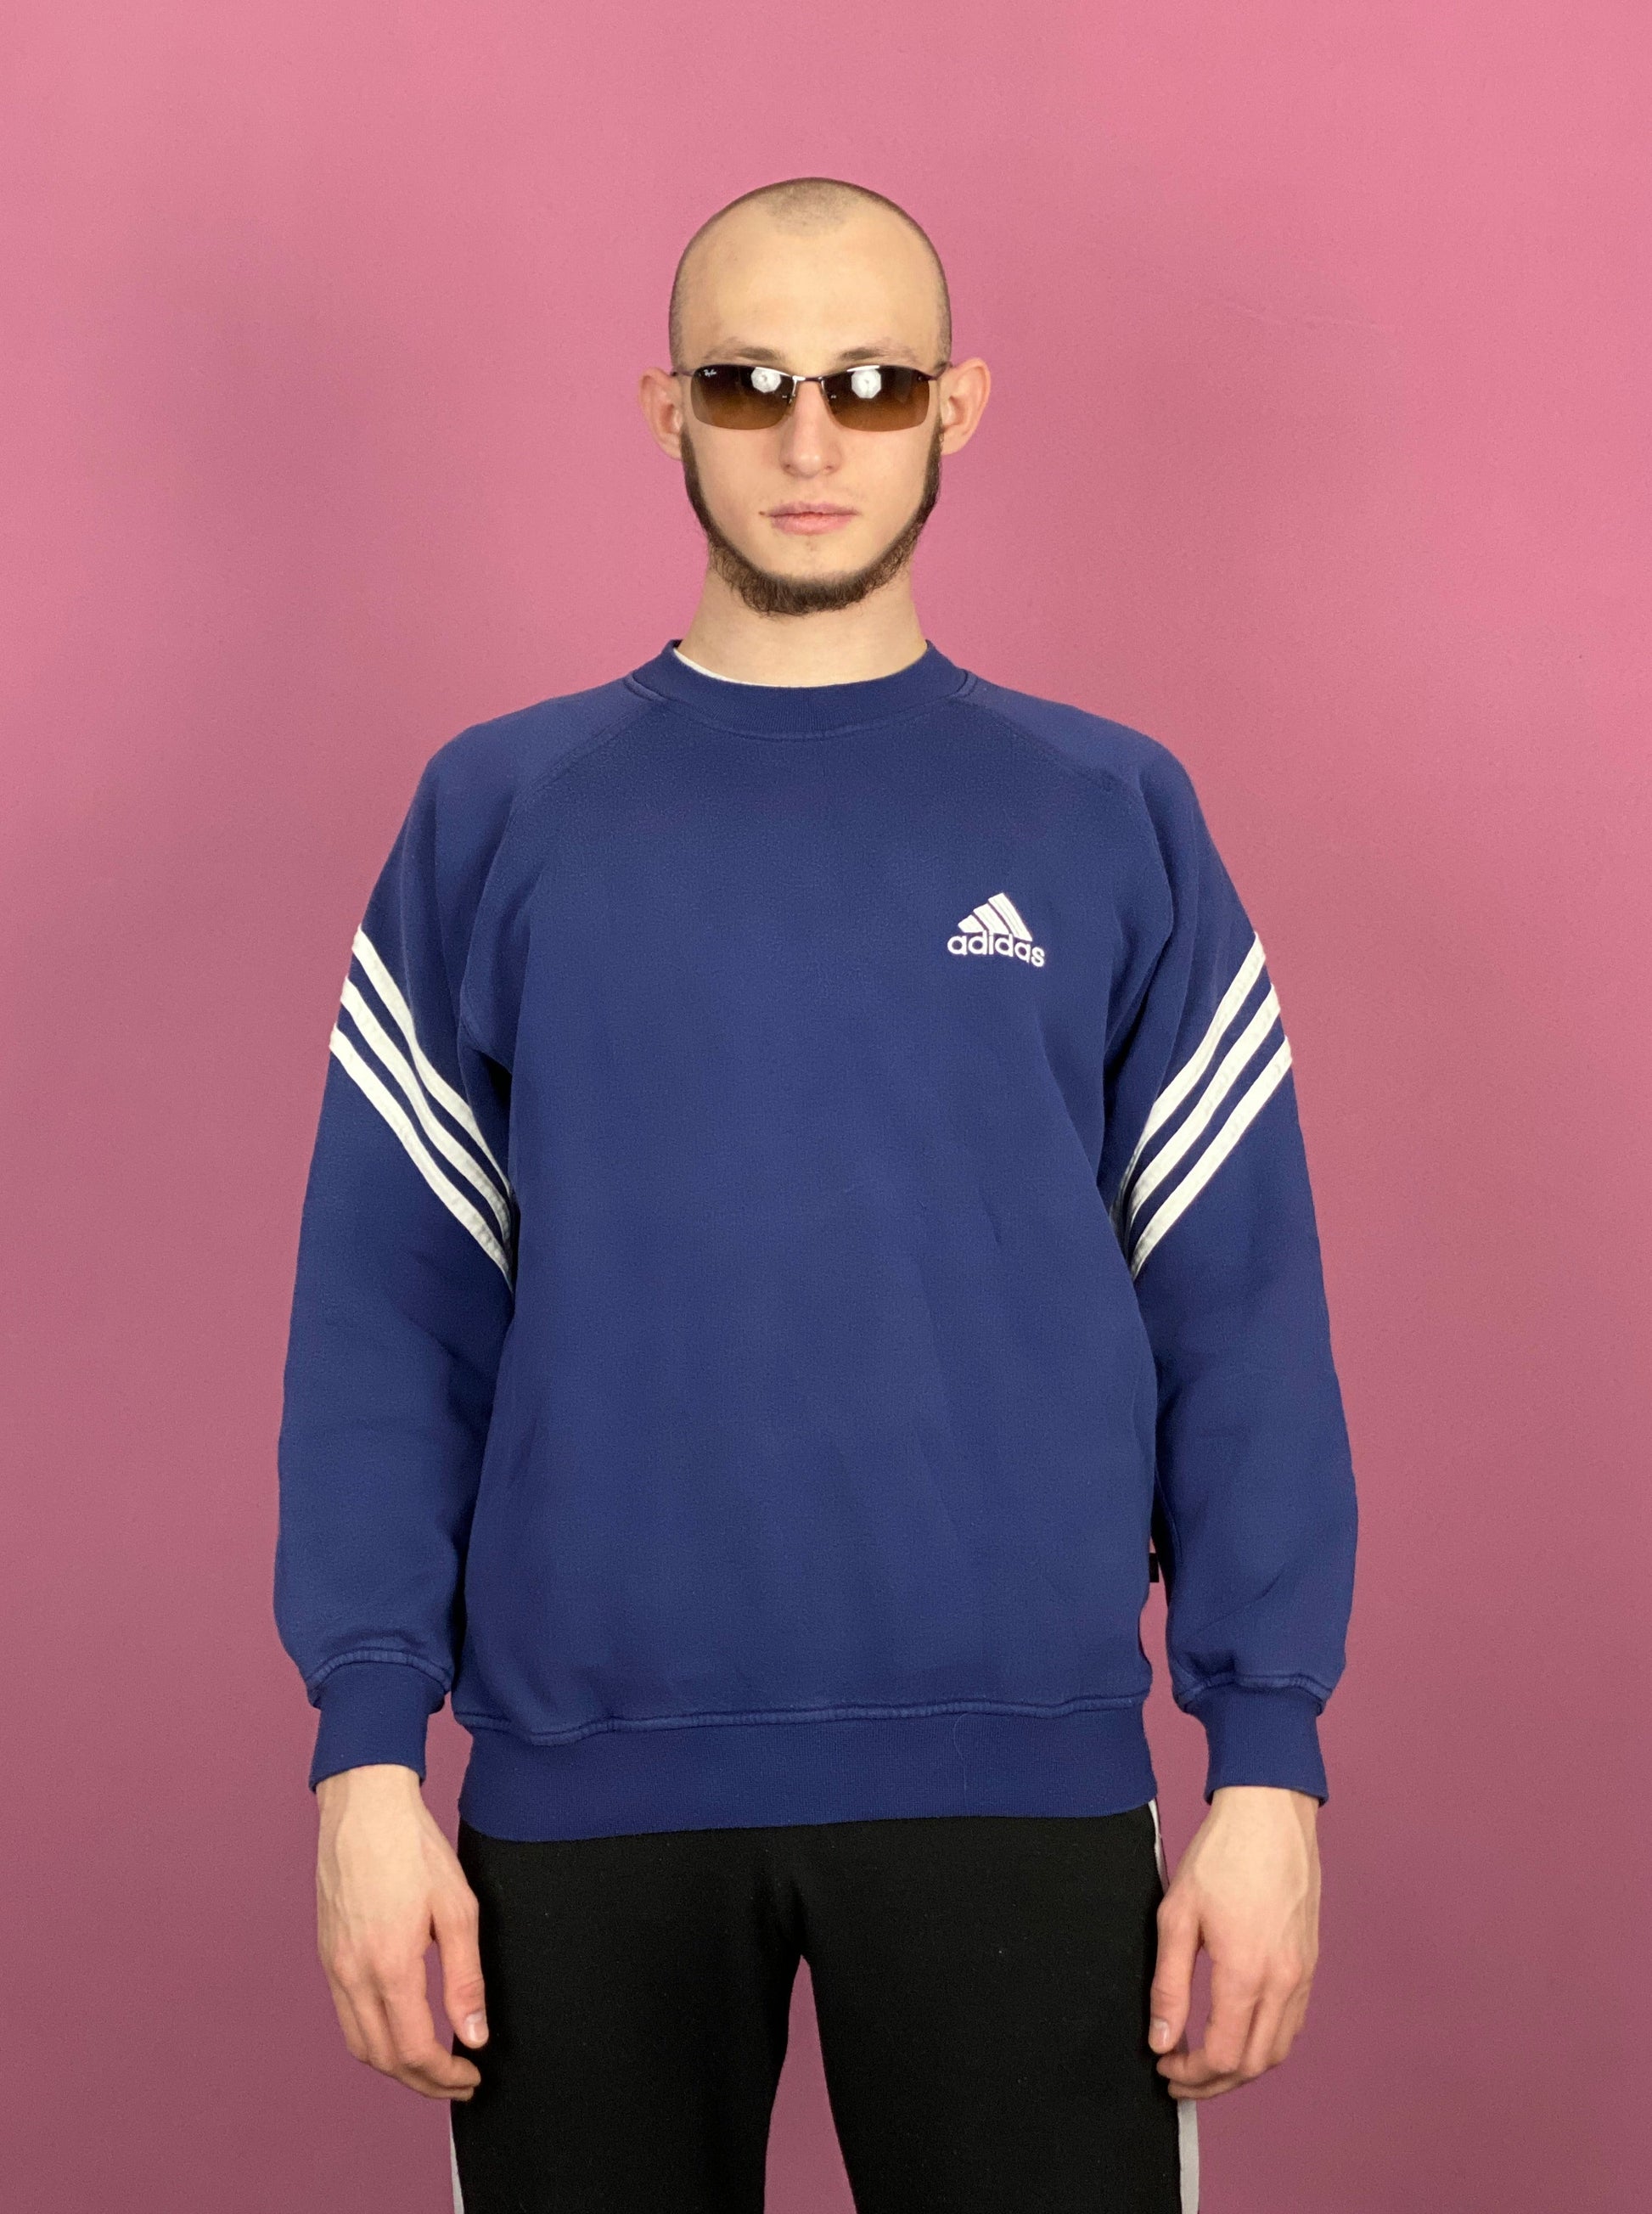 90s Adidas Vintage Men's Sweatshirt - Medium Navy Blue Cotton Blend